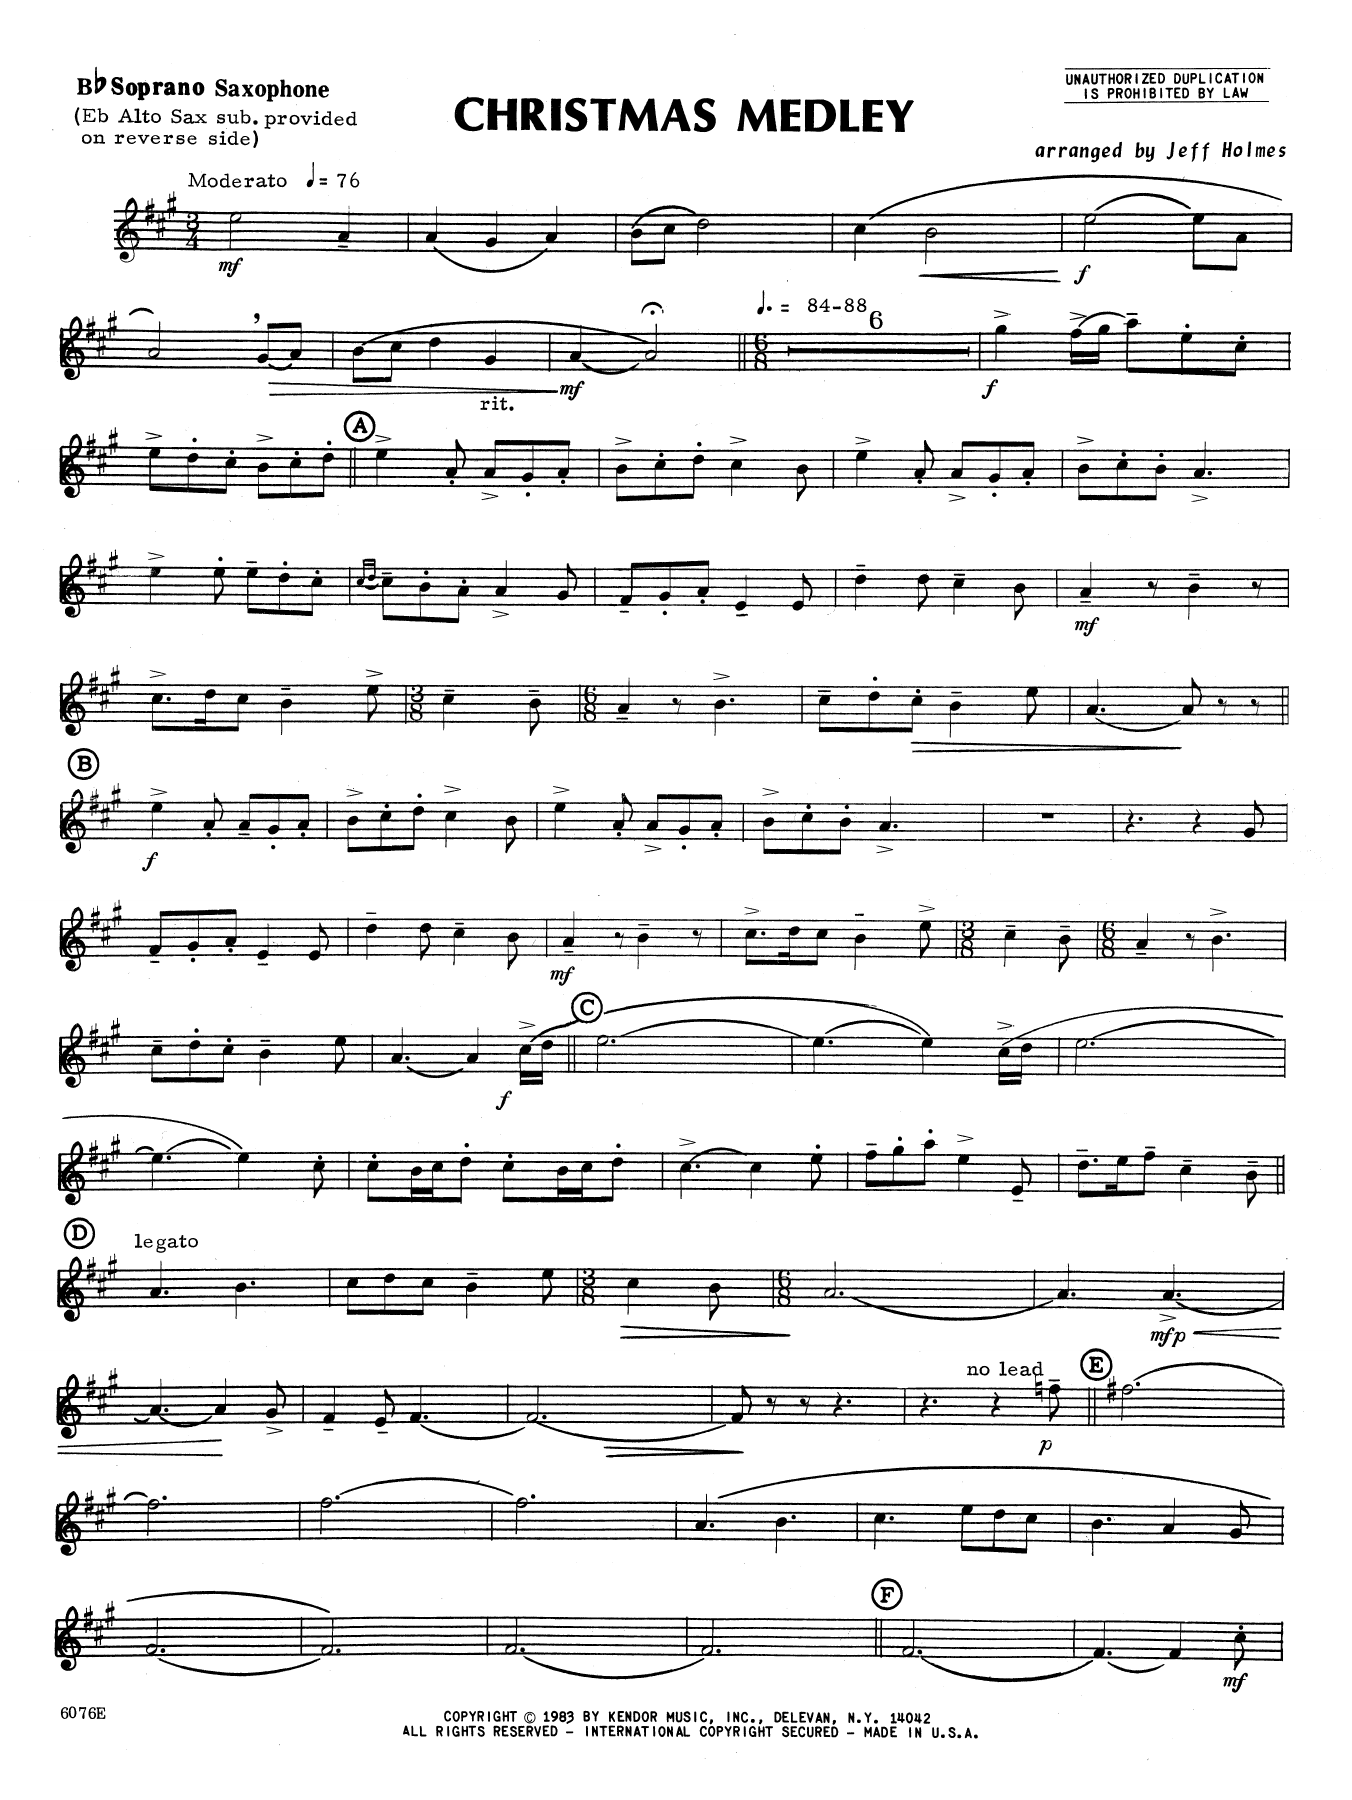 Download Holmes Christmas Medley - Bb Soprano Sax Sheet Music